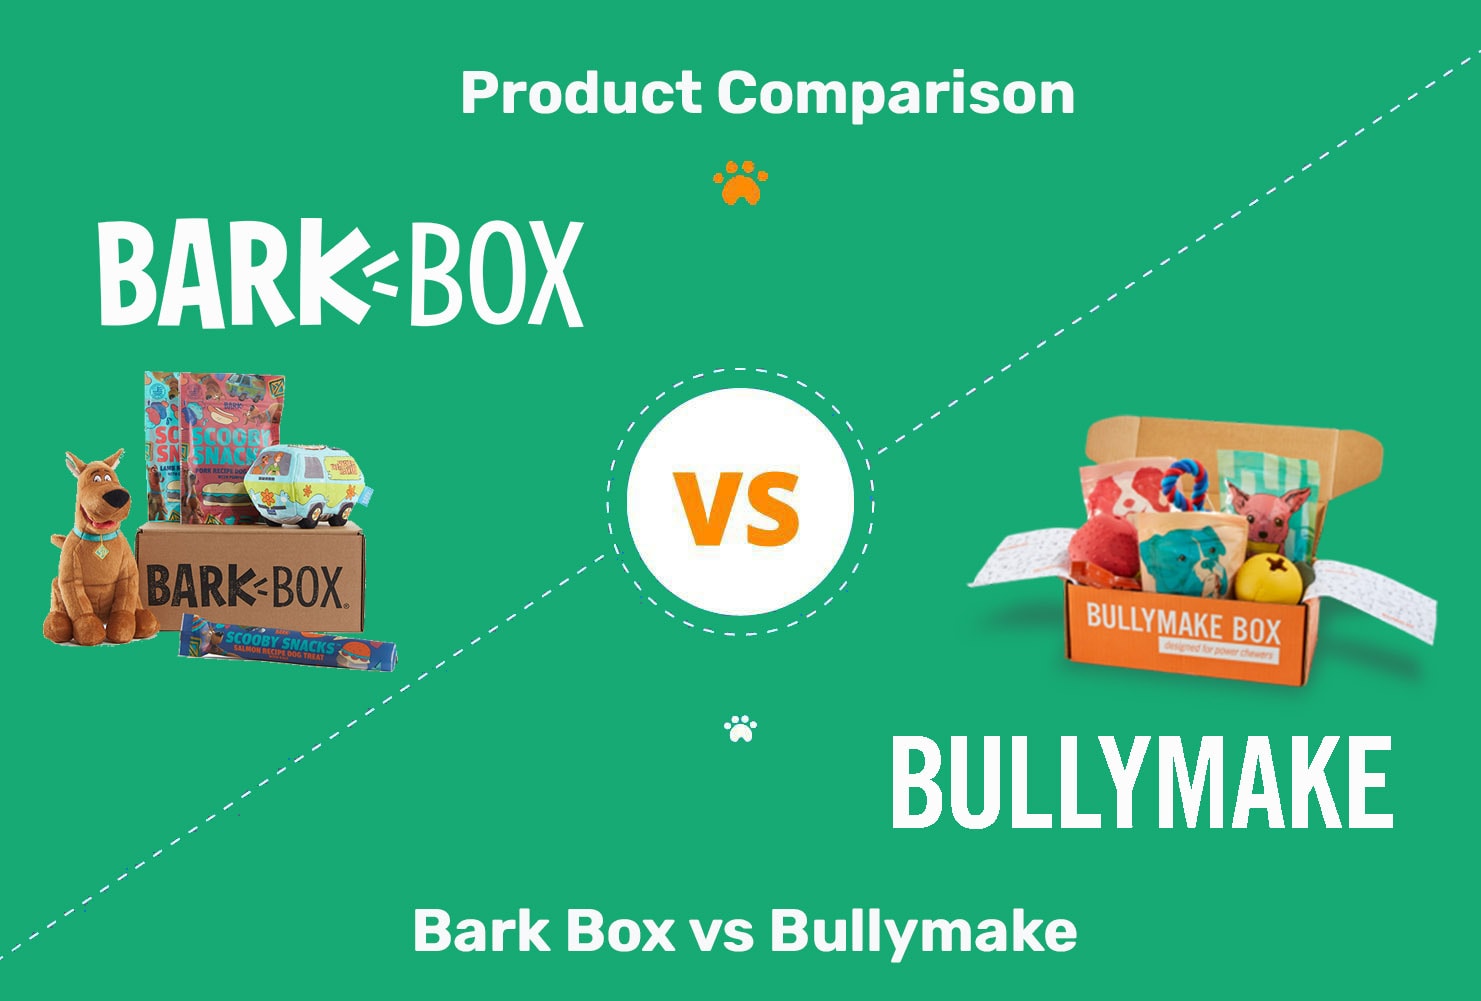 barkbox vs bullmake boxes pk